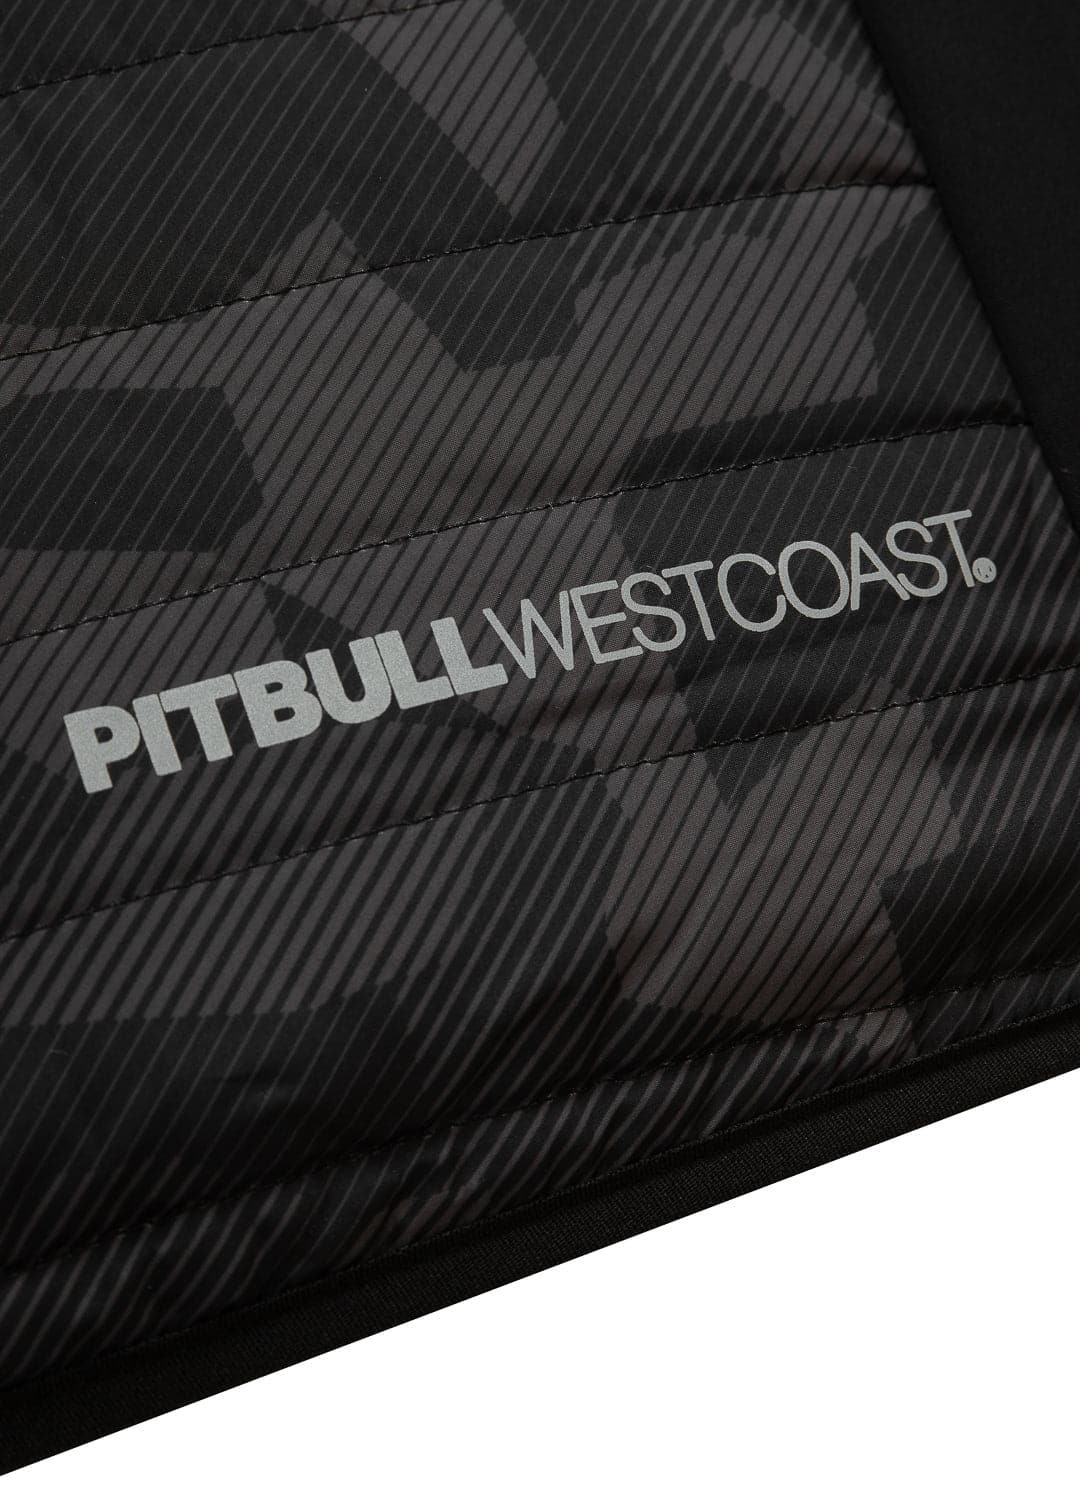 DILLARD Kids camo jacket - Pitbull West Coast International Store 